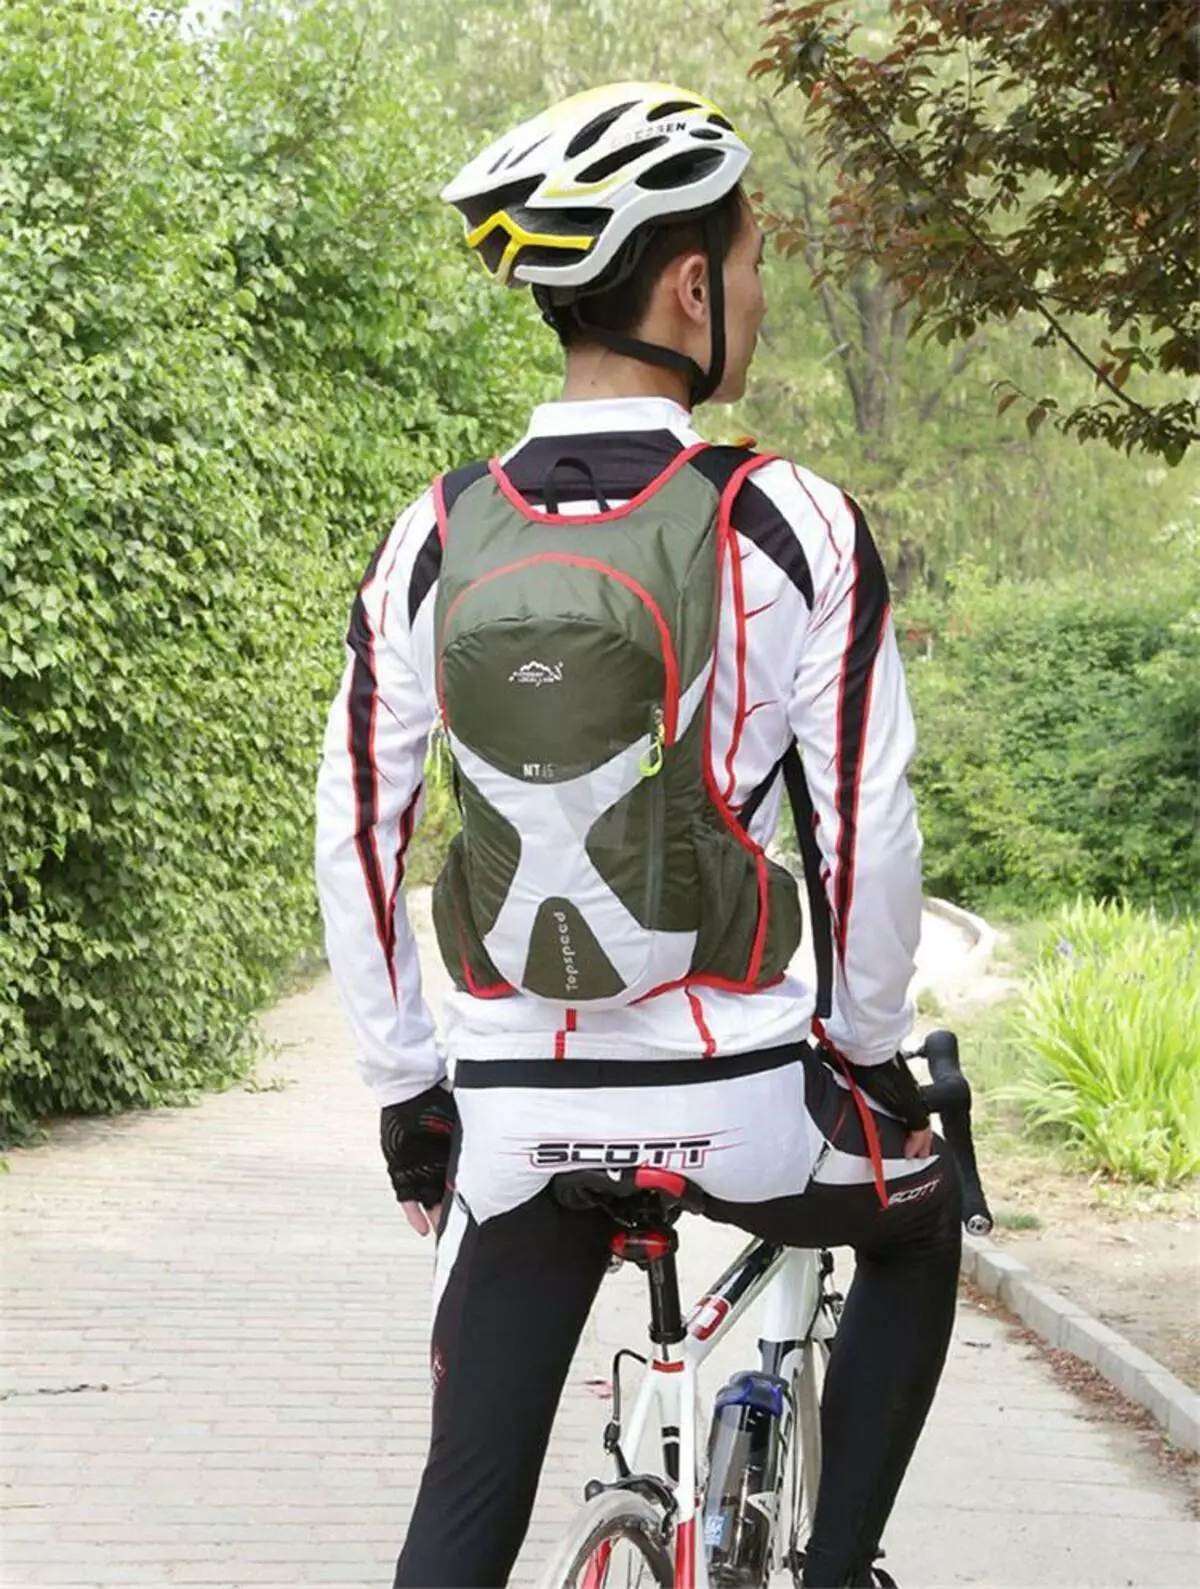 Velorryukzak: Odaberite ruksak na prtljažniku bicikla i na poleđini bicikliste, biciklističke ruksak Deuter, ciklotech, thule i drugi modeli 20506_3